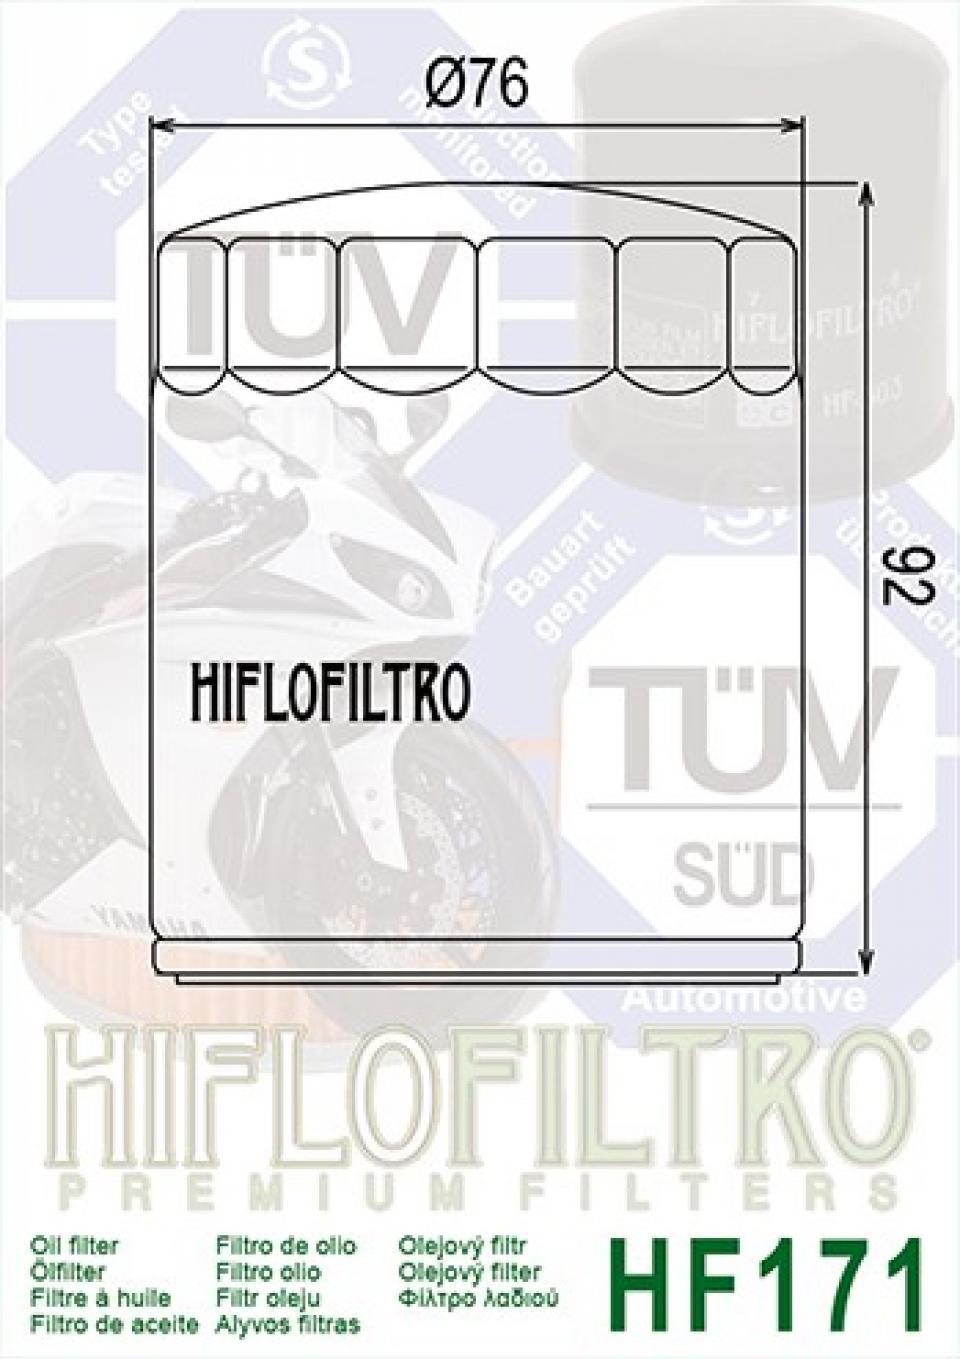 Filtre à huile Hiflofiltro pour Moto Buell 1200 X1 Lighting 1994 à 2002 Neuf